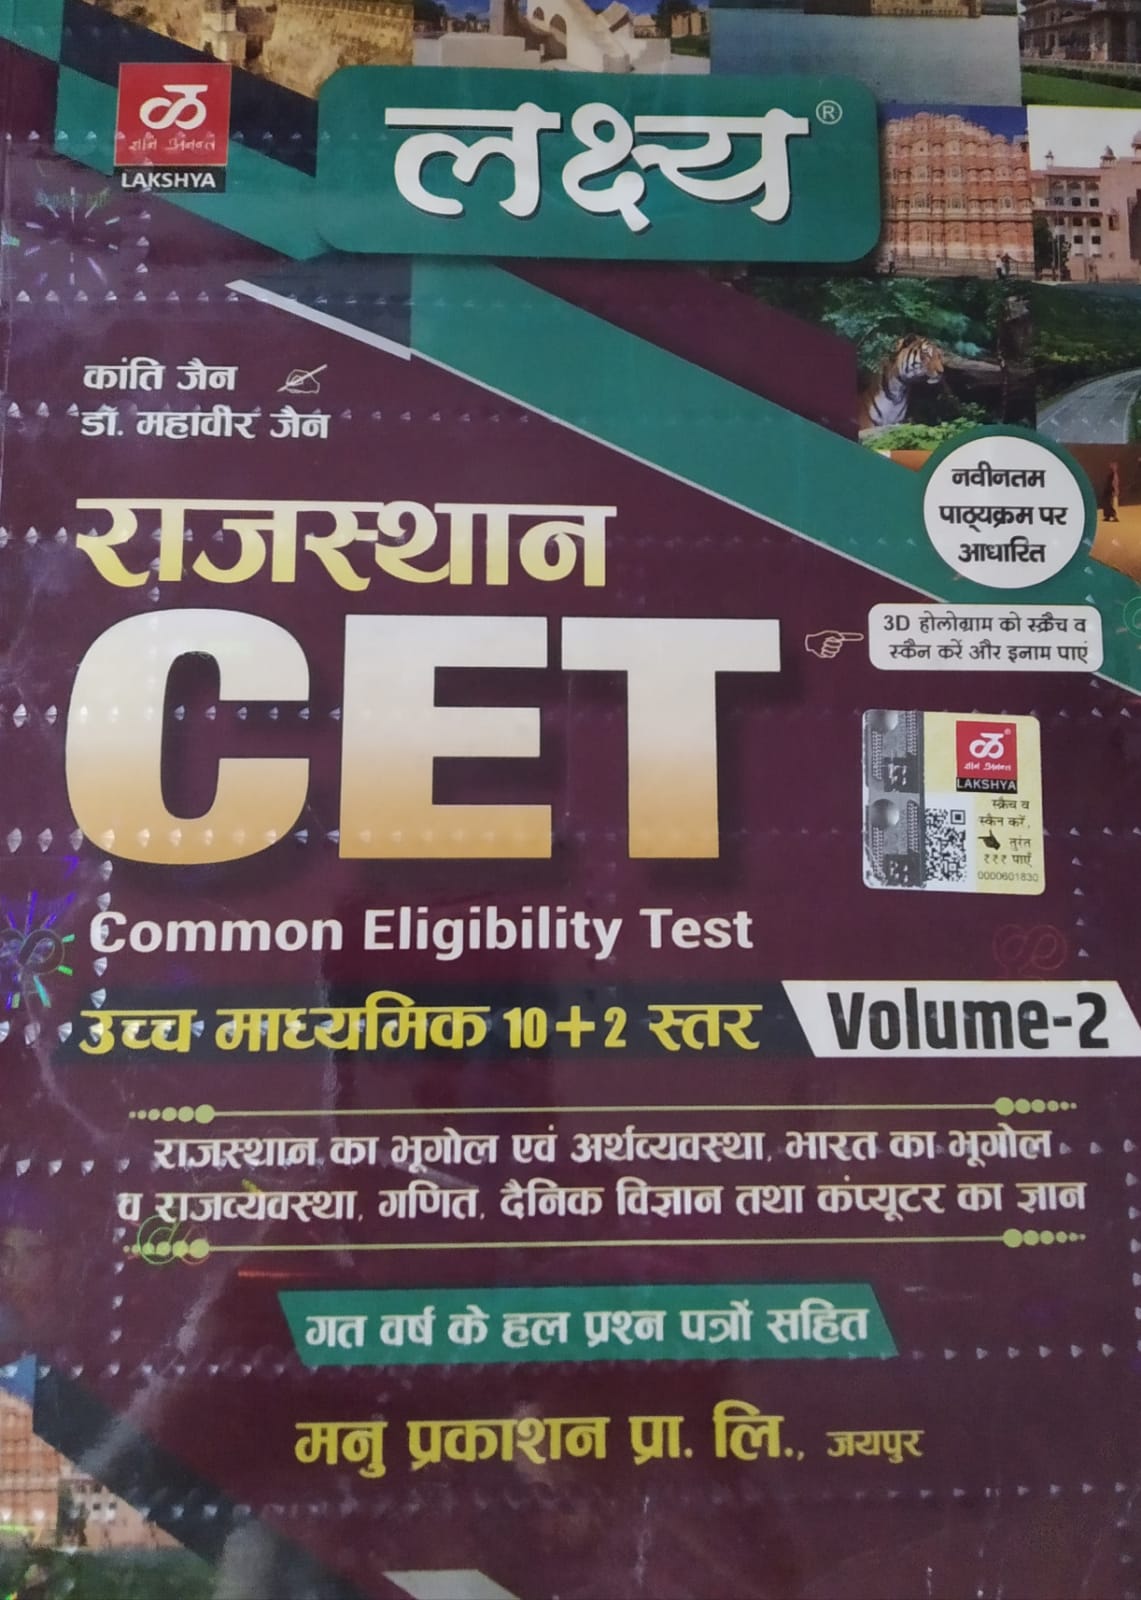 Lakshya Rajasthan CET ( (common eligibility test) 10+2 Volume-2